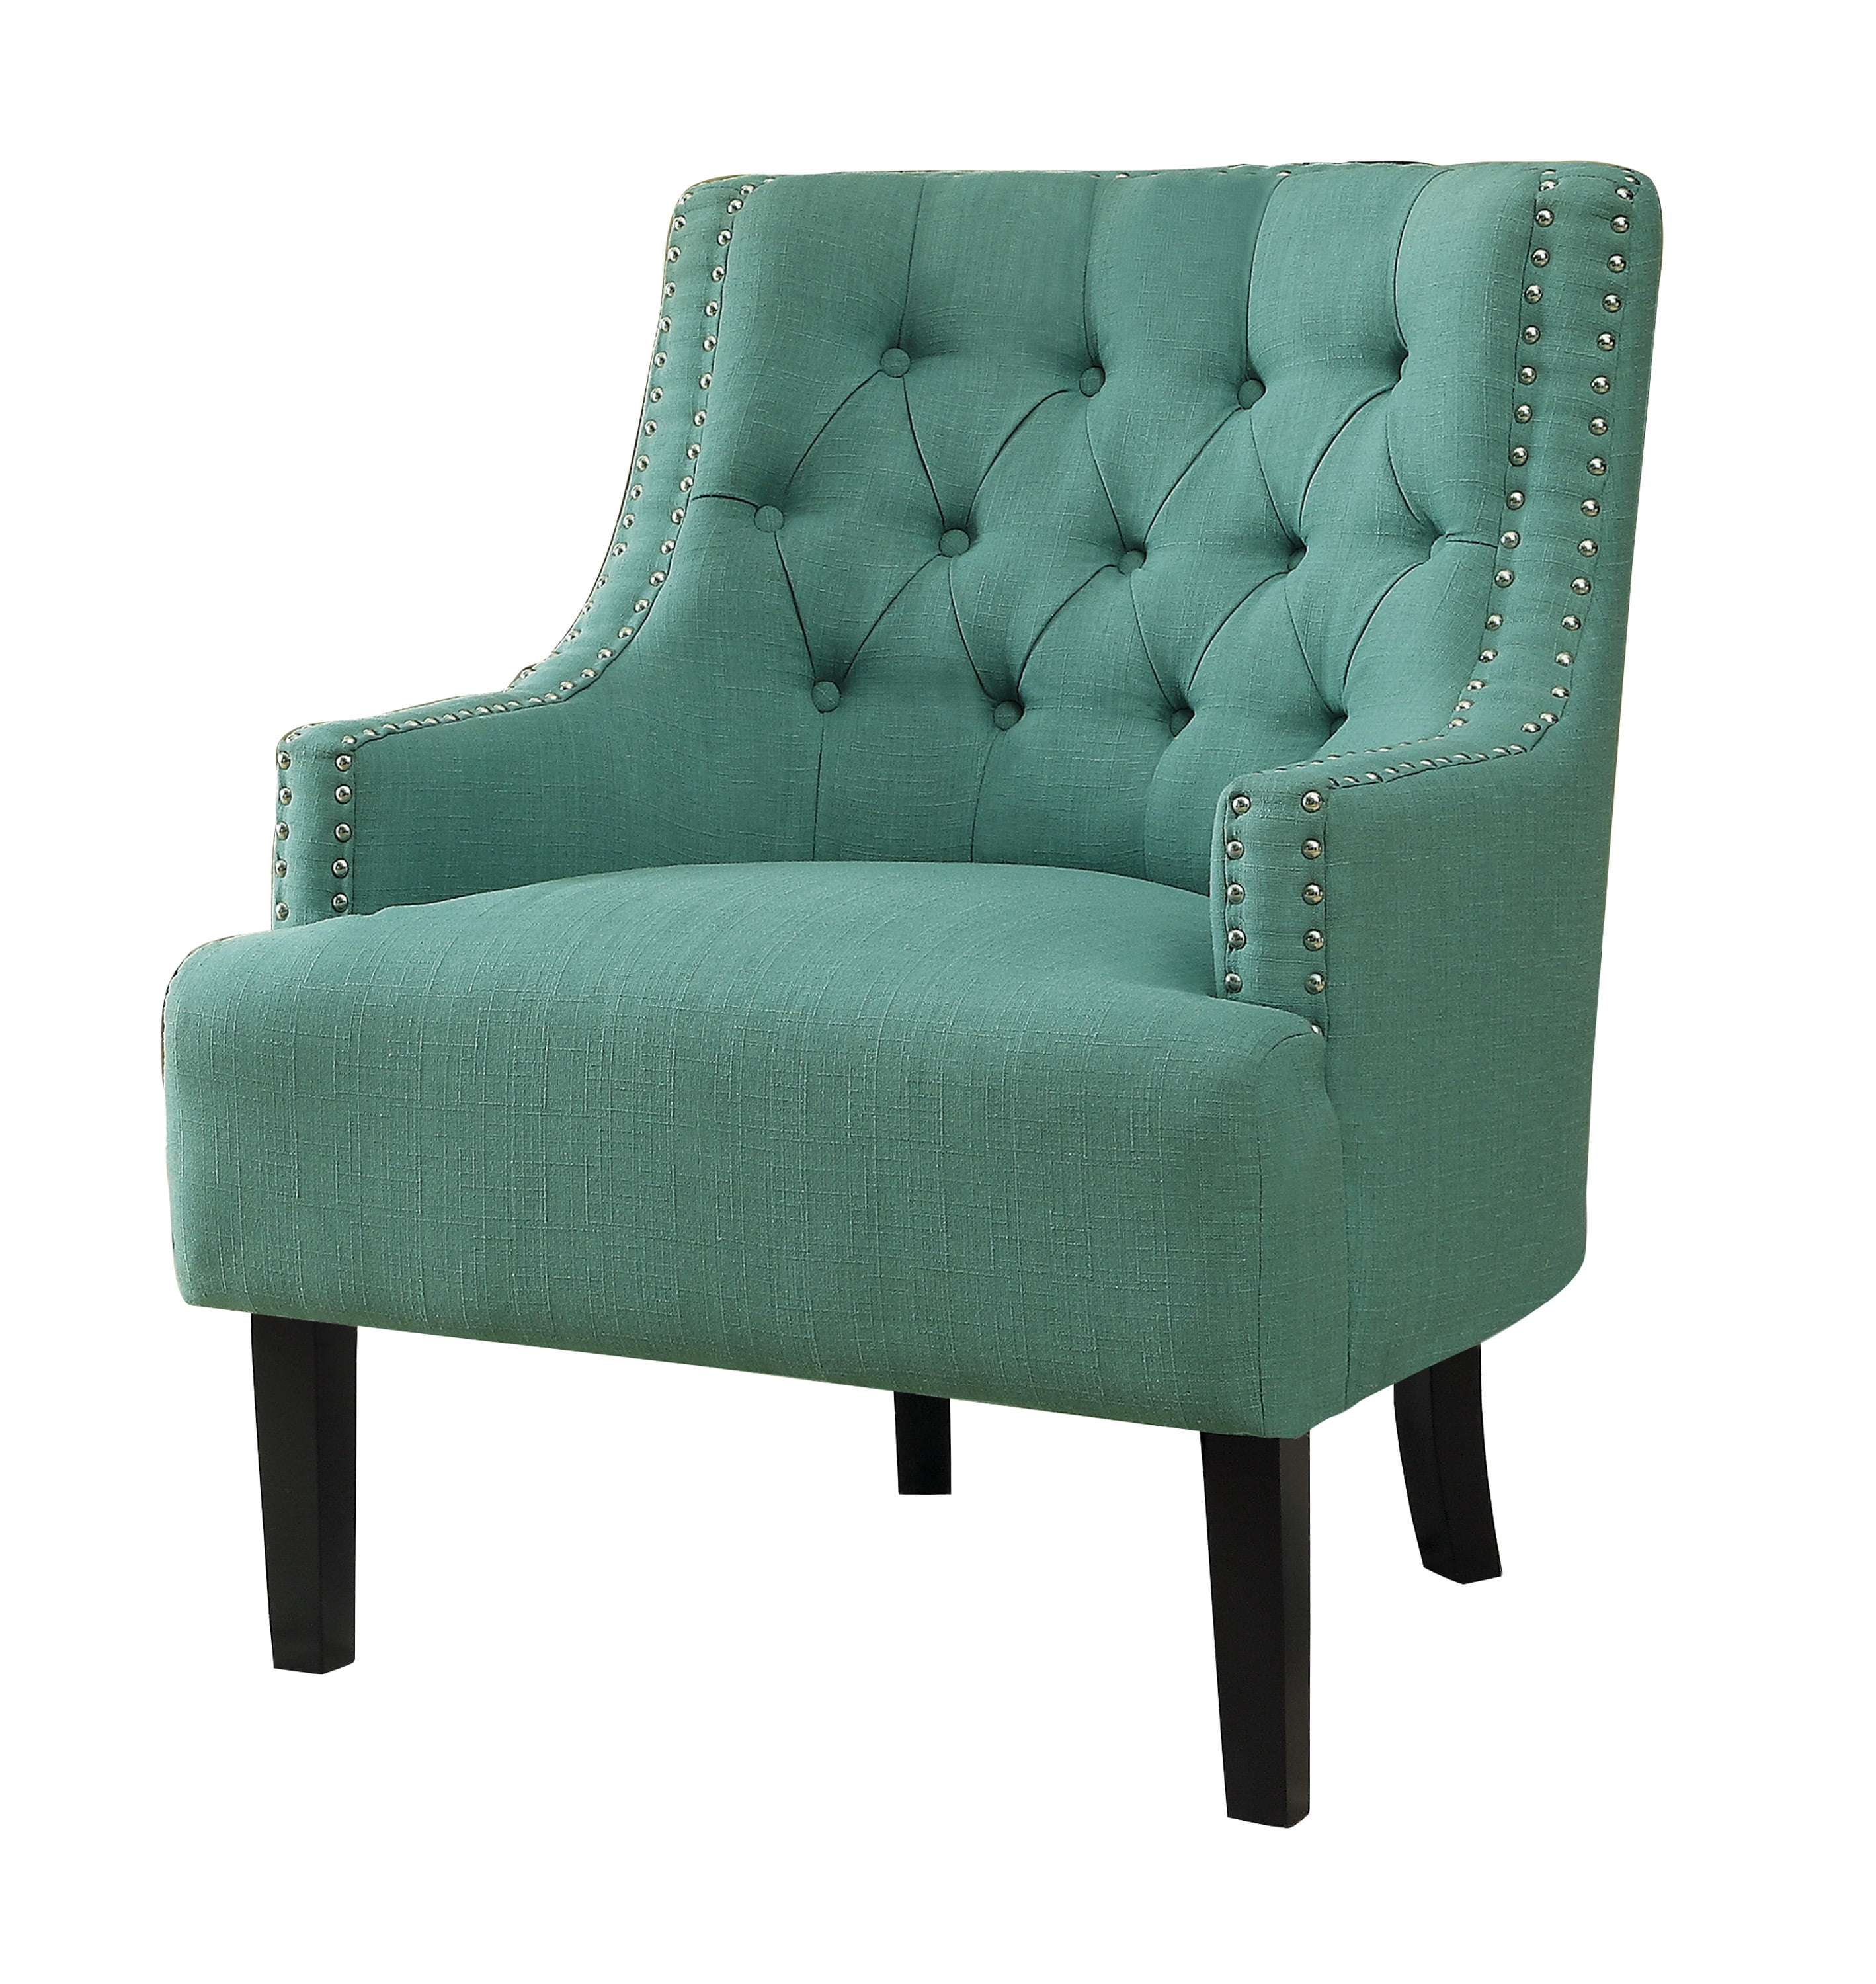 Charisma accent chair, Teal color - Walmart.com